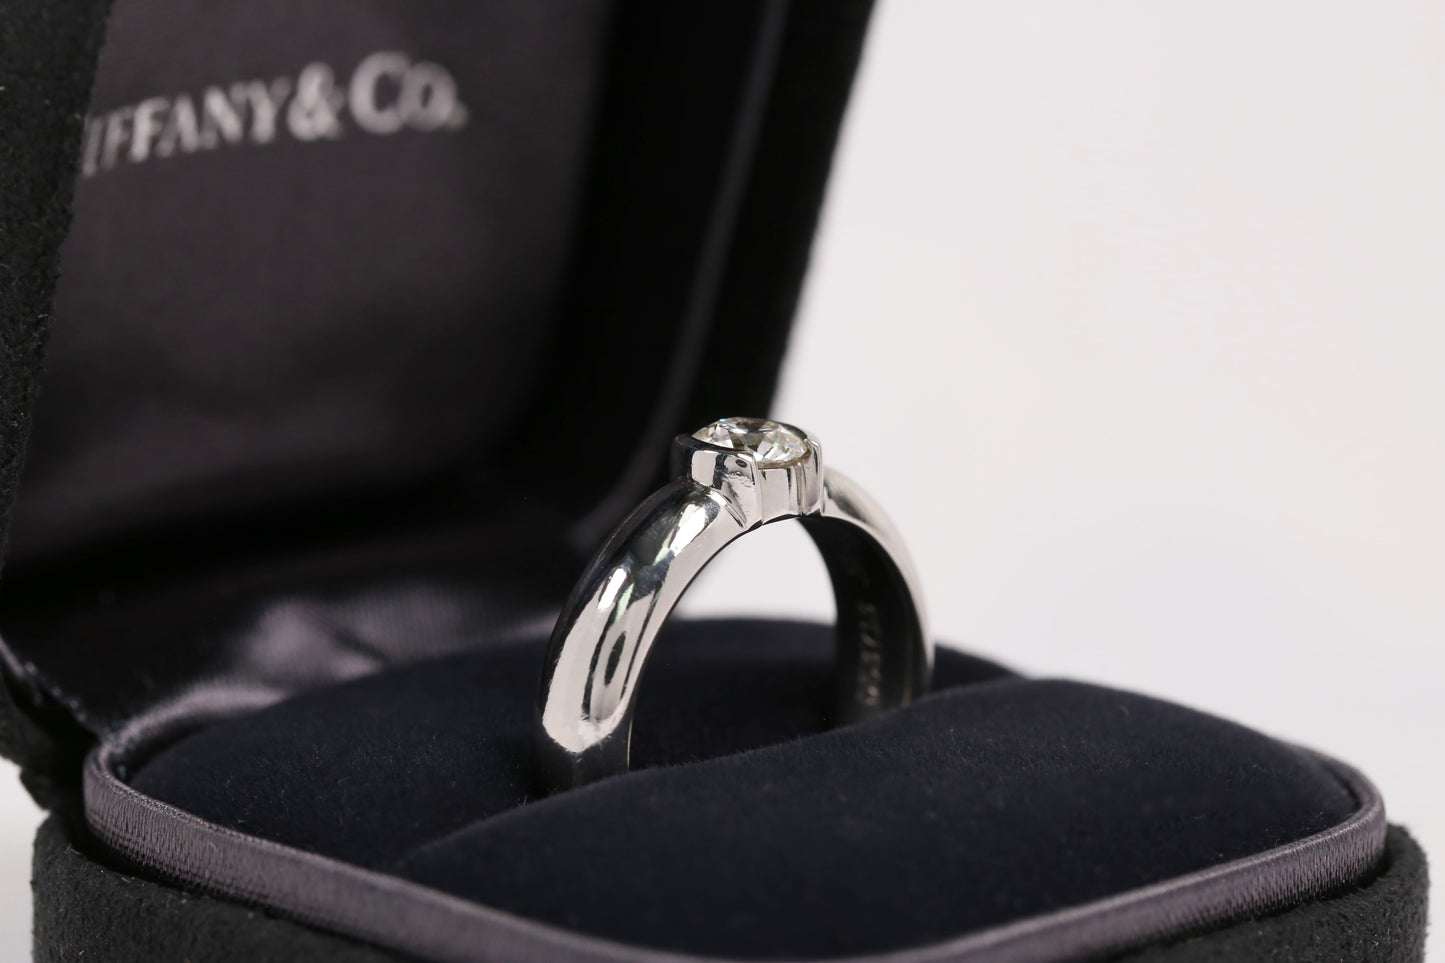 Tiffany & Co. Platinum Etoile Solitare Engagement Ring, Size 6.75 - 12.3g